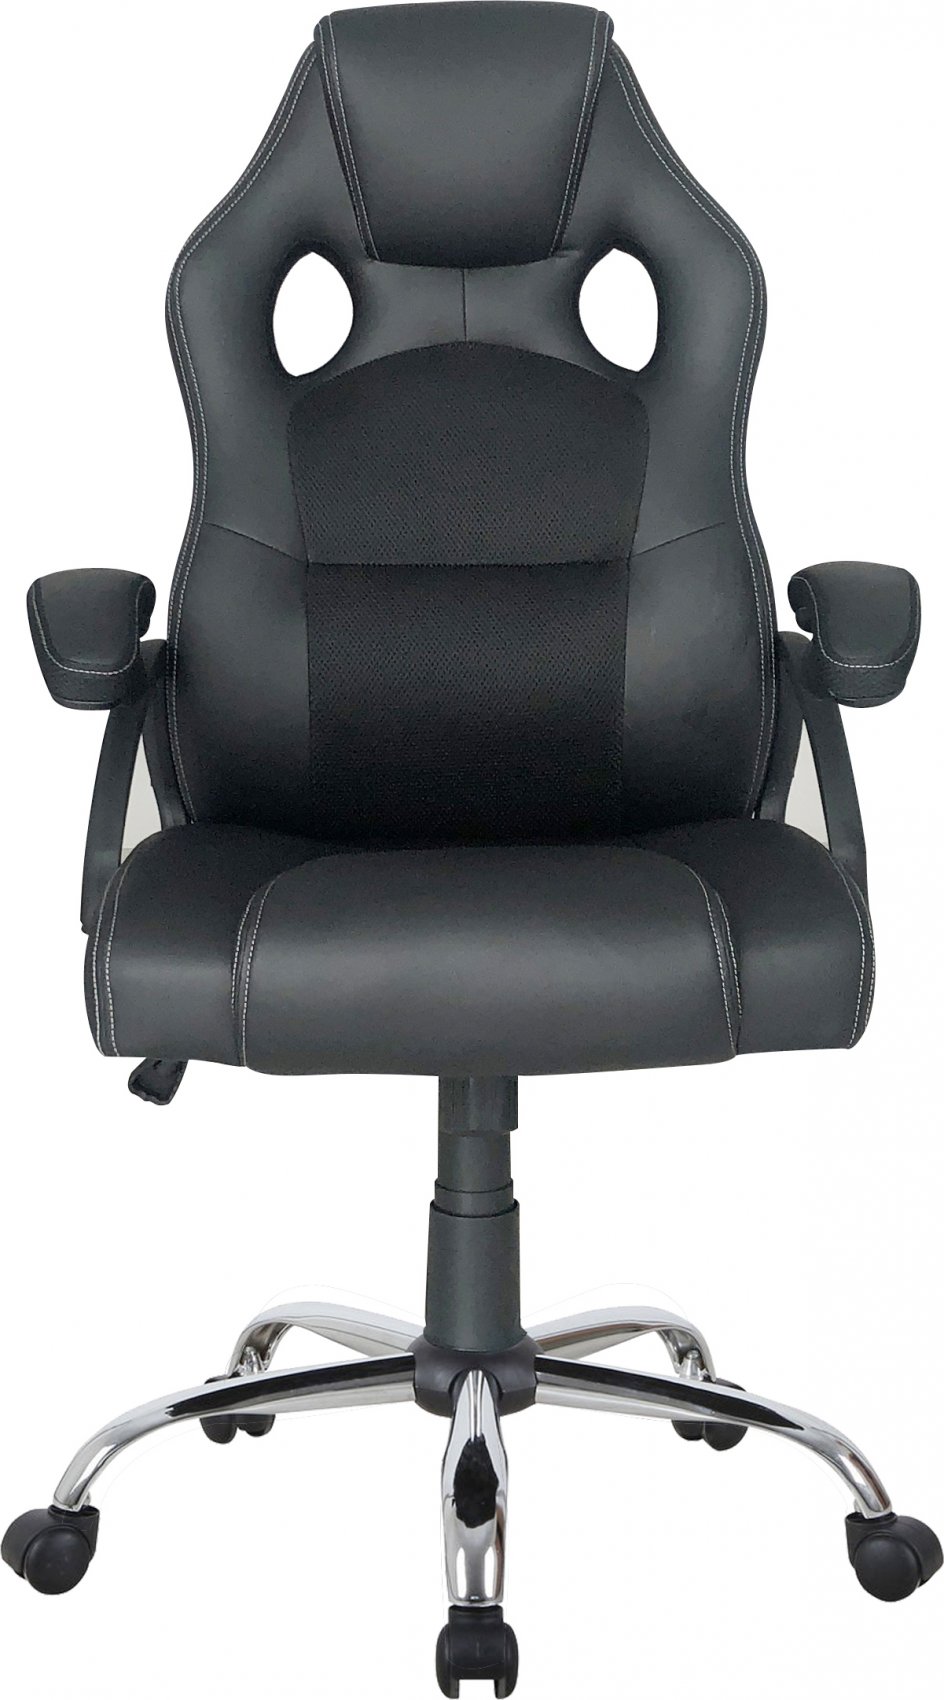 651006 silla de oficina ergonomica equip color negro recubrimiento pu de  alta calidaddiseno ergonomico